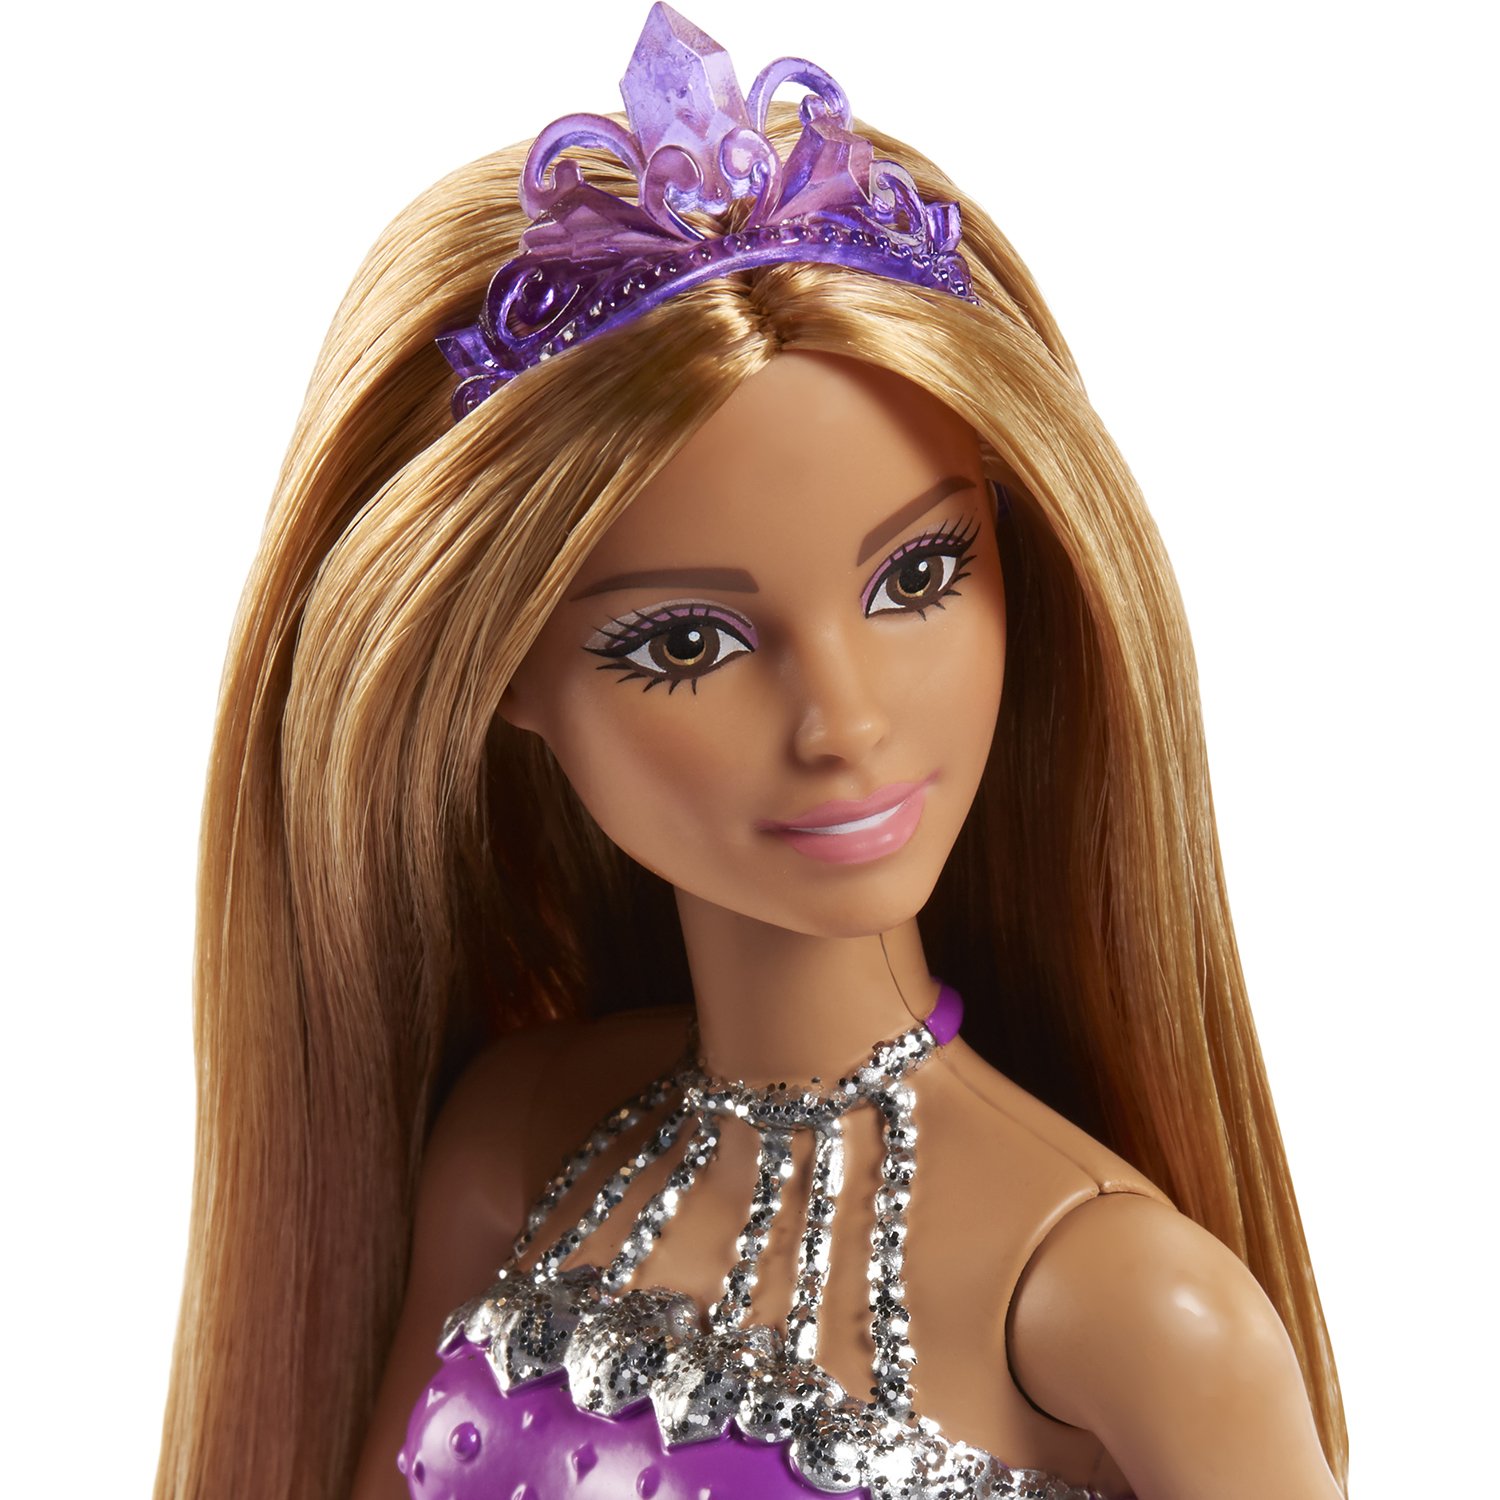 Кукла Barbie Волшебная Принцесса, 29 см, FJC97